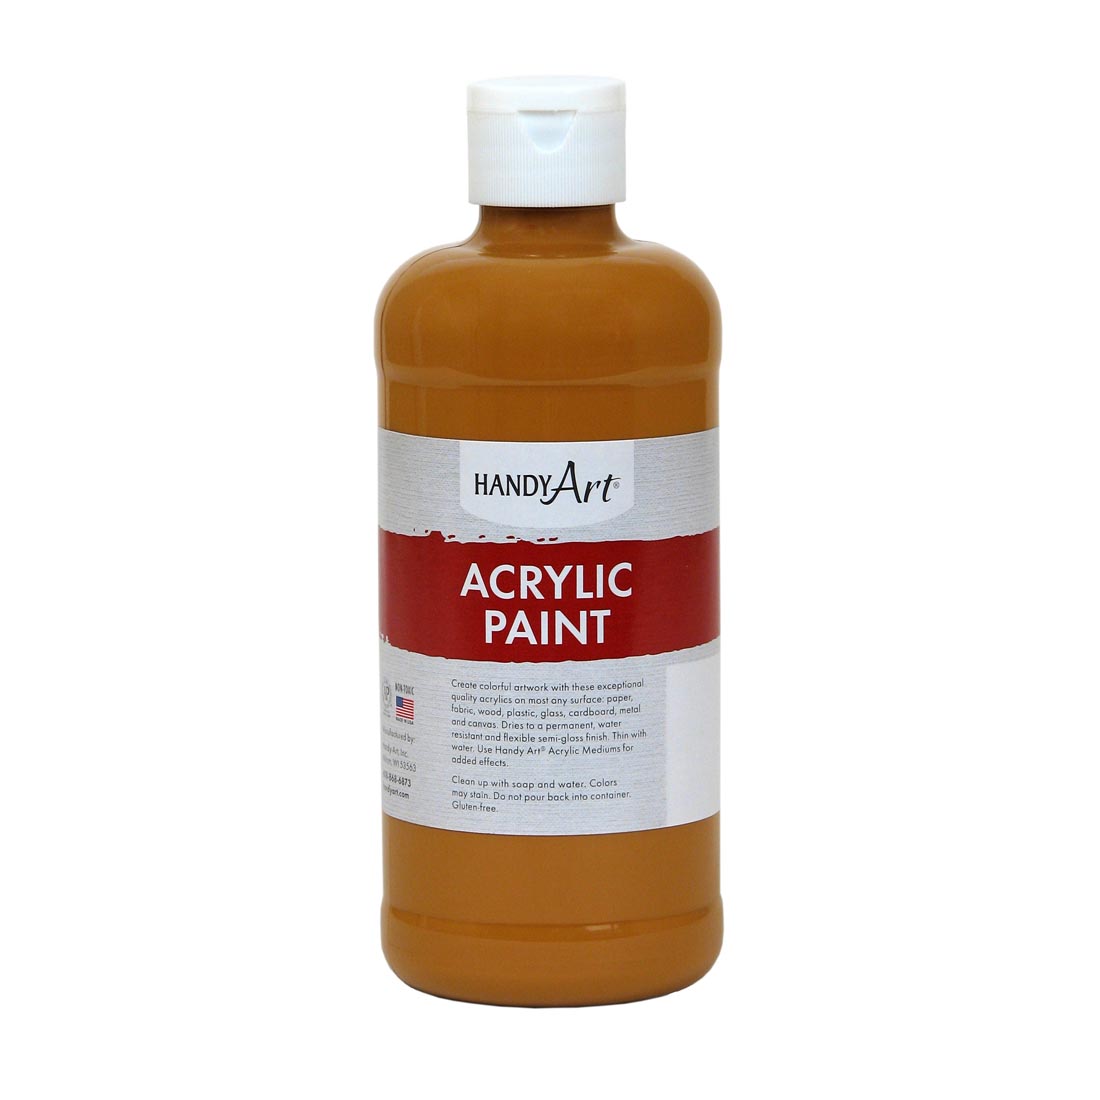 Pint Bottle of Raw Sienna Handy Art Acrylic Paint